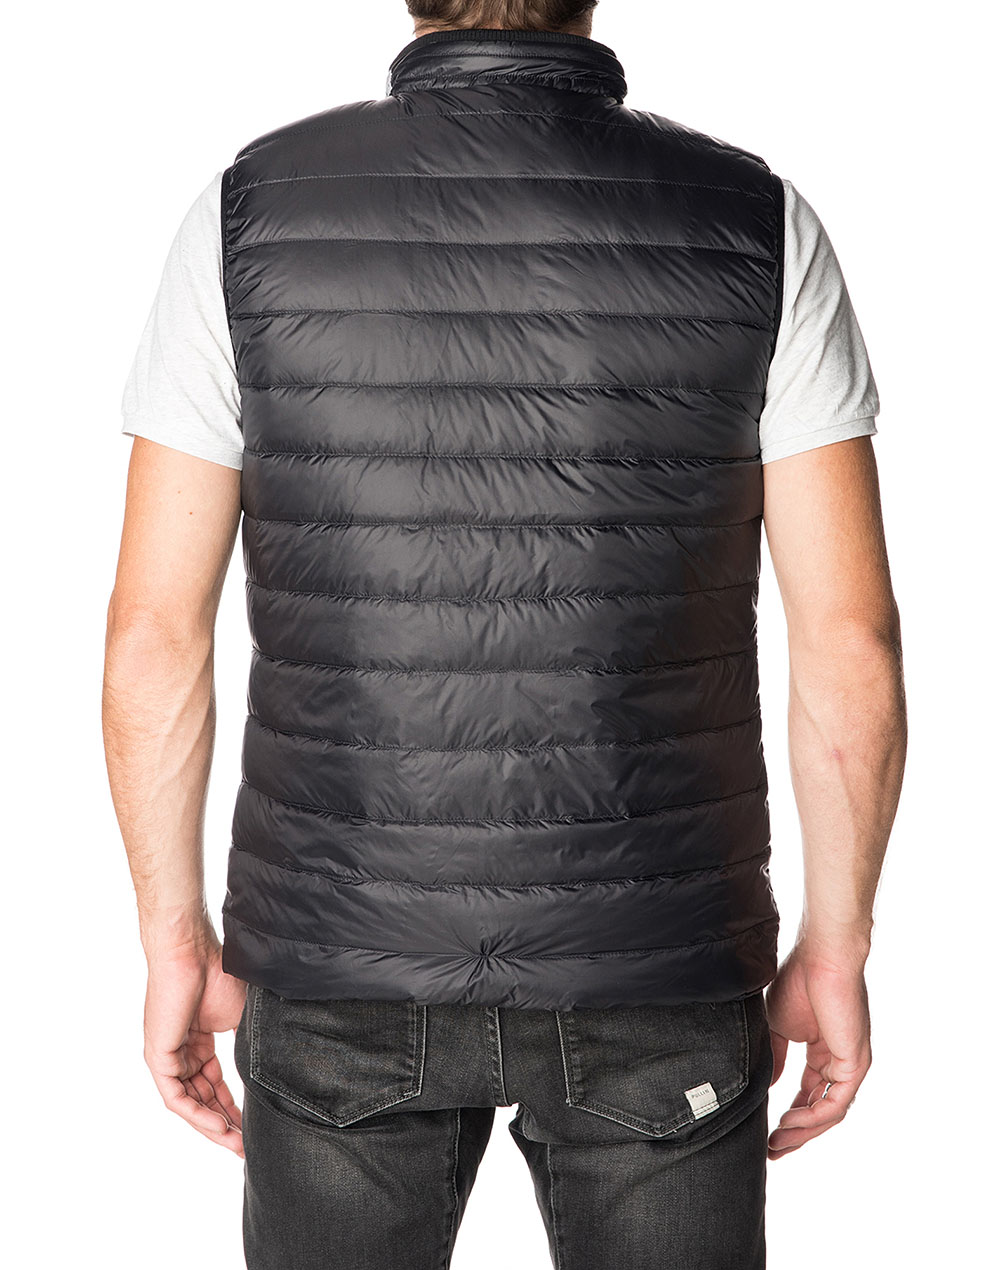 Men's feather jacket without sleeves BULLIT